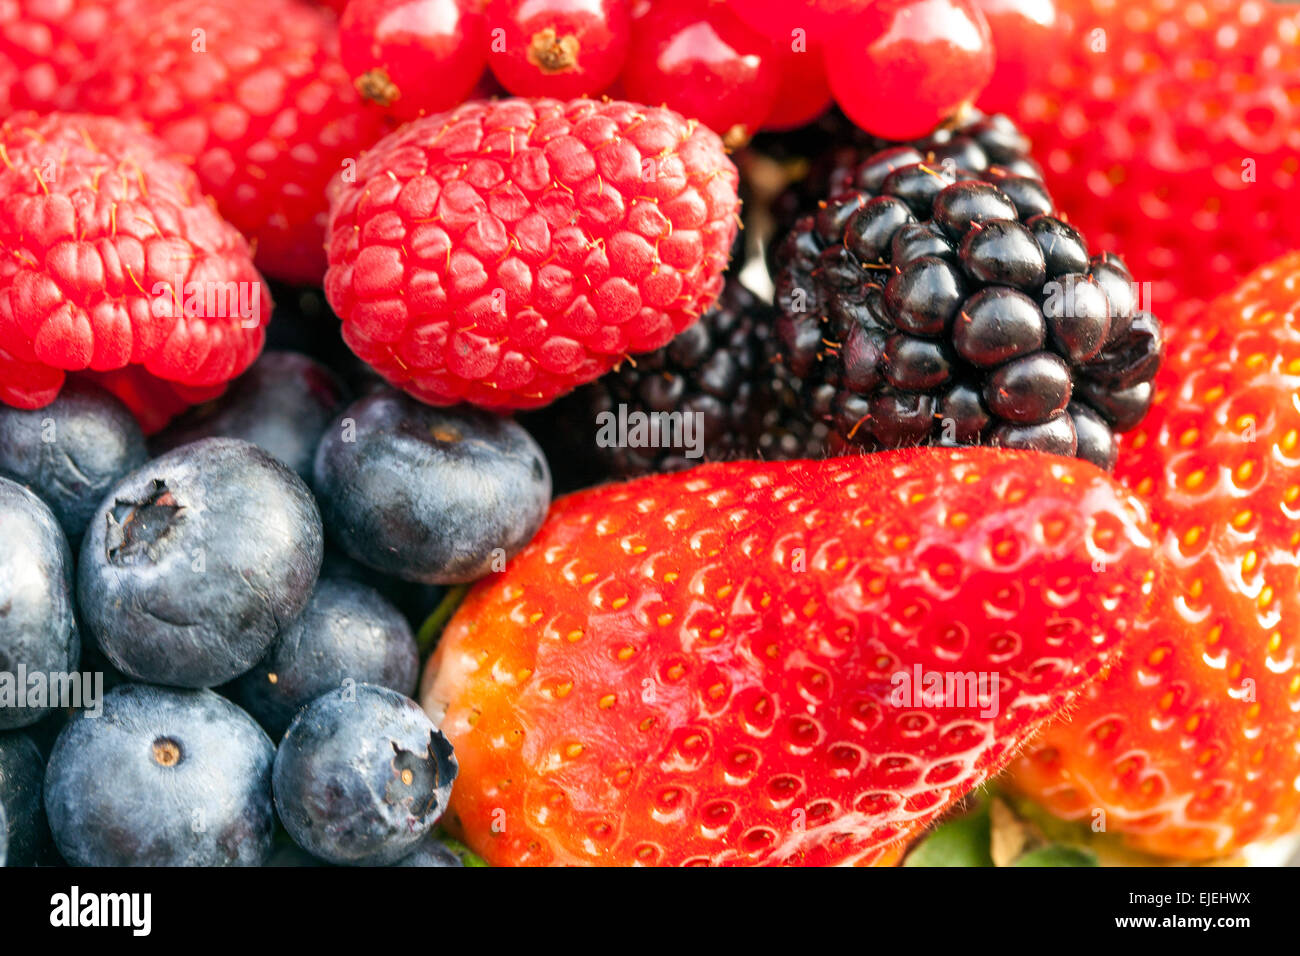 Blackberries, Raspberries, Strawberries, Blueberries close up texture DeliciousFruits Juicy berries Stock Photo